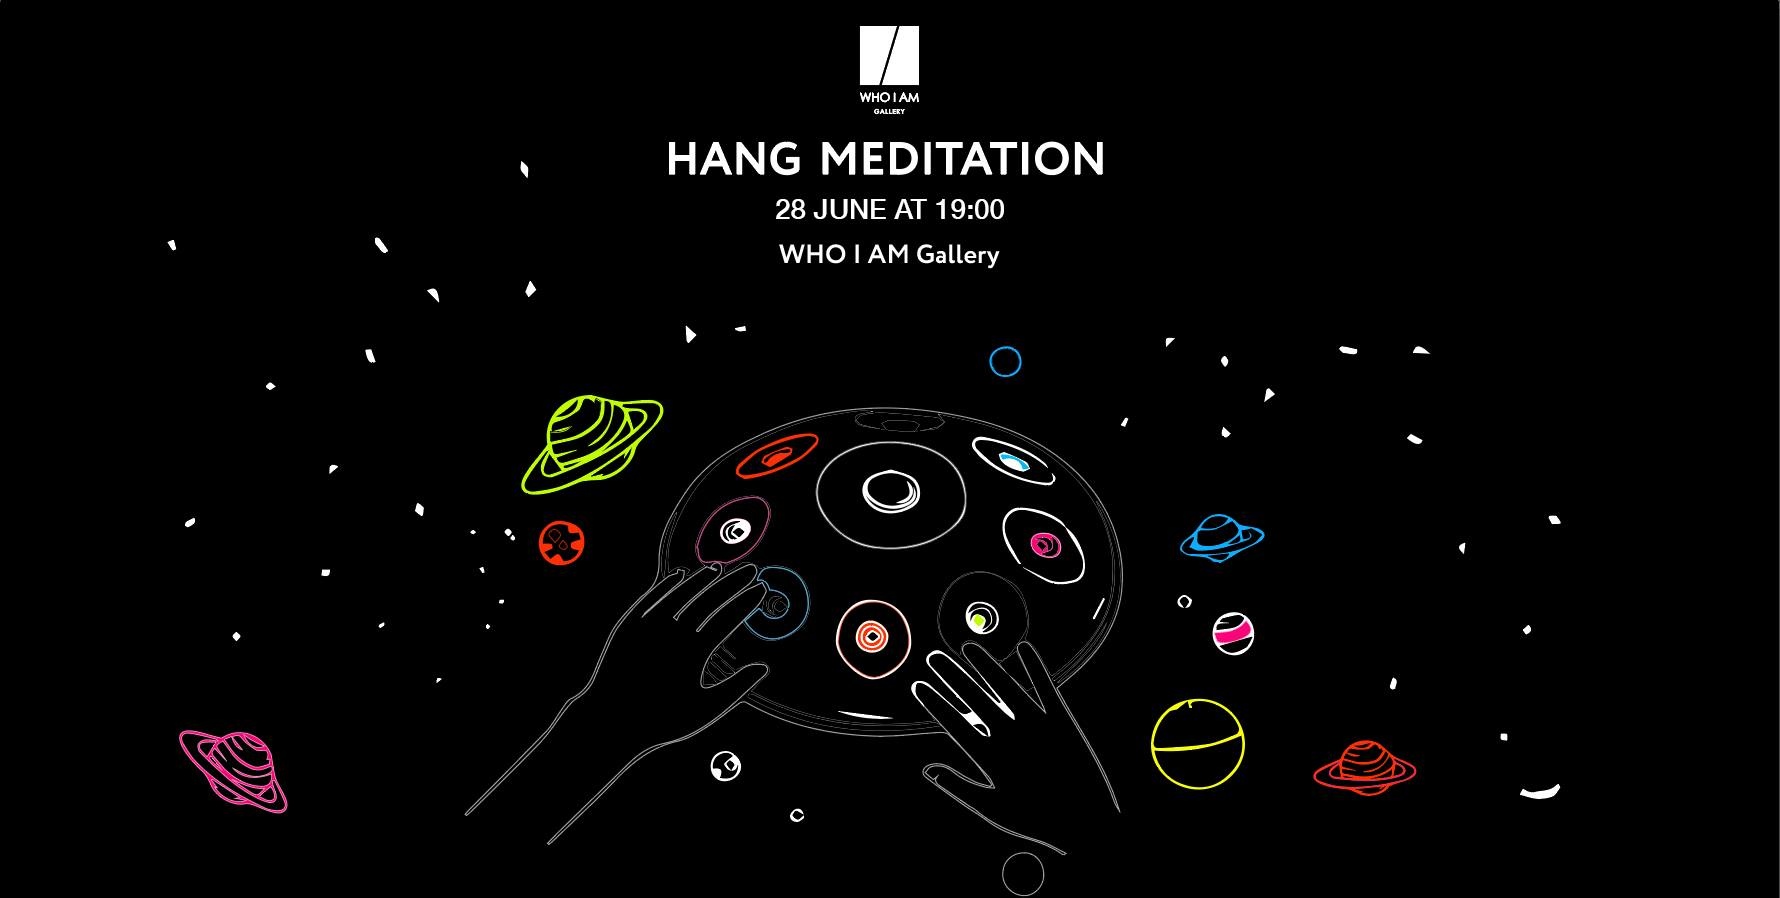 Hang meditation